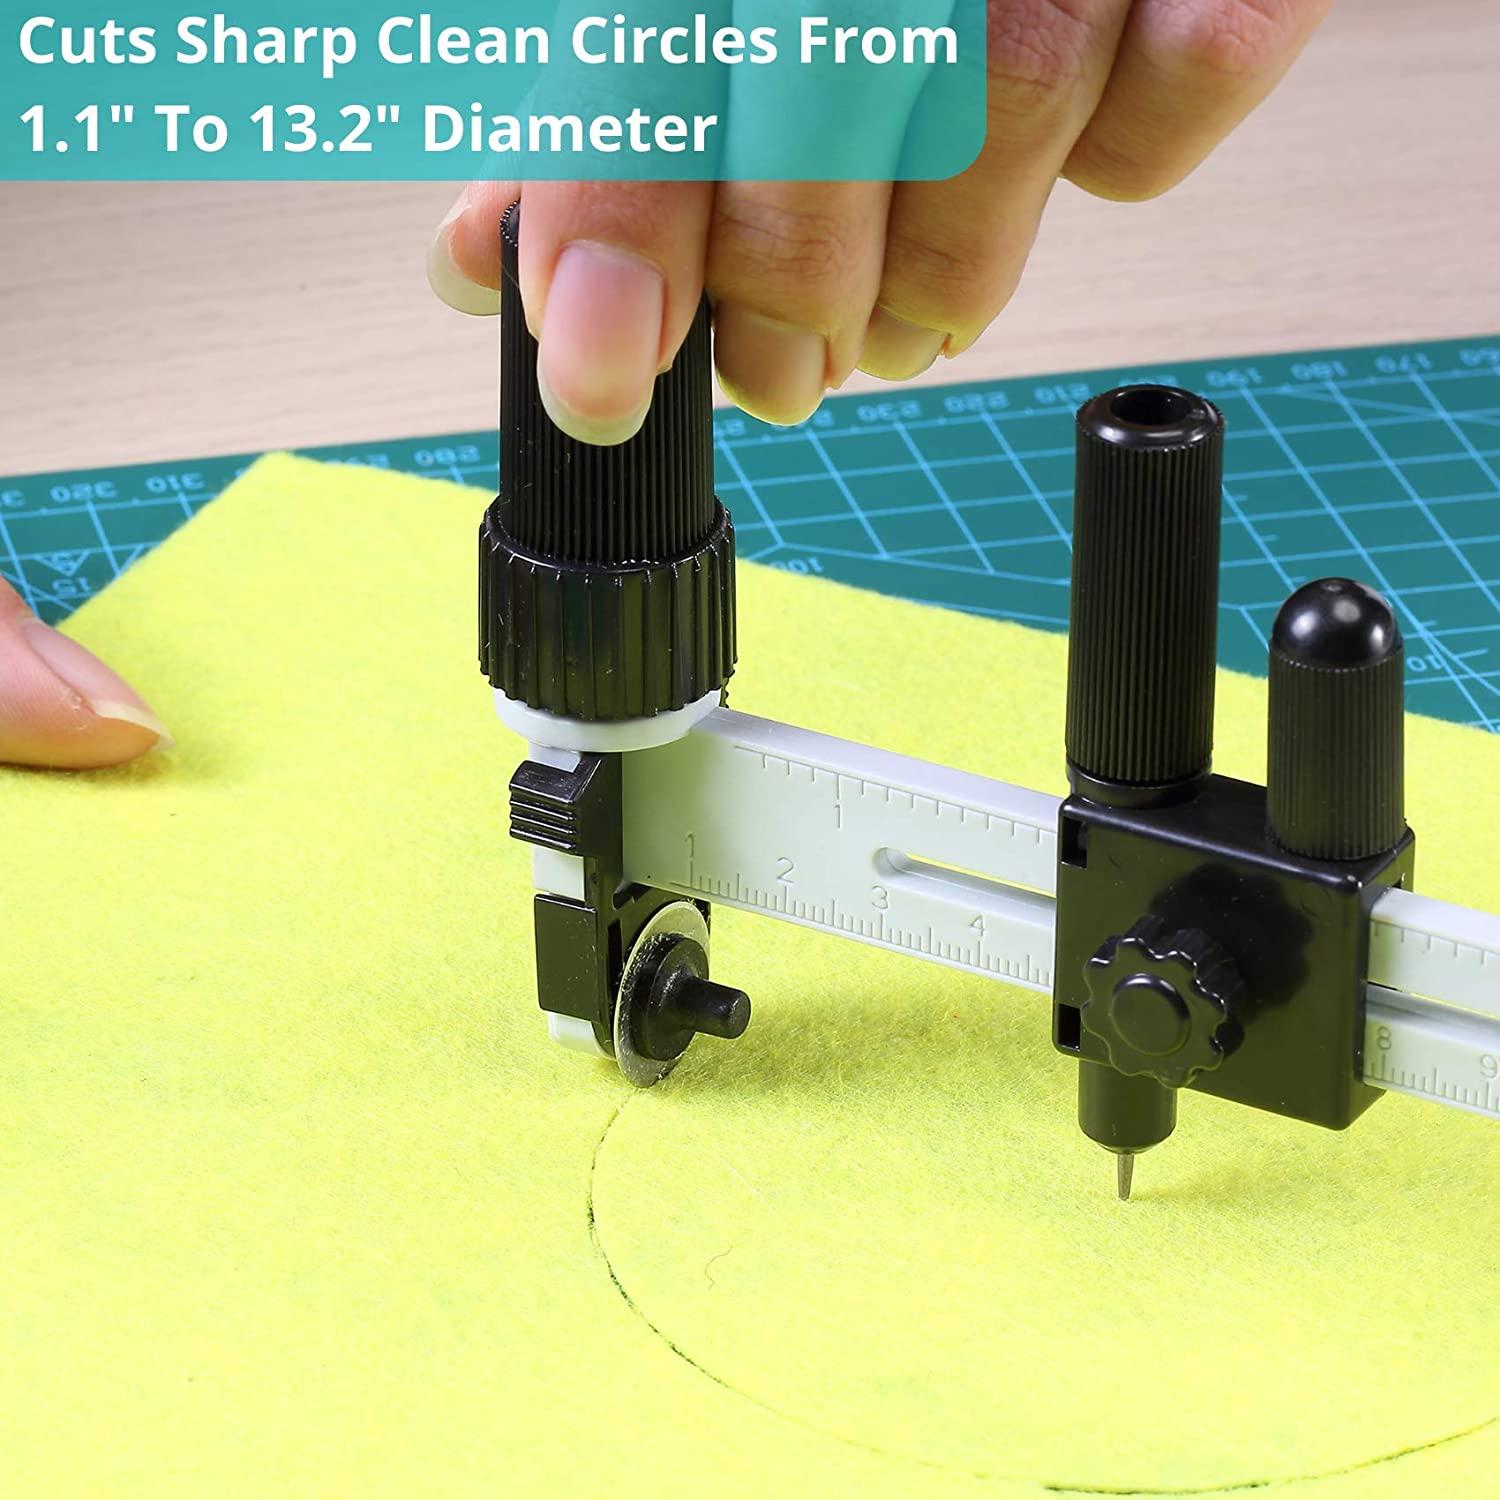 Mr. Pen- Compass Circle Cutter, Rotary Circle Cutter, Circle